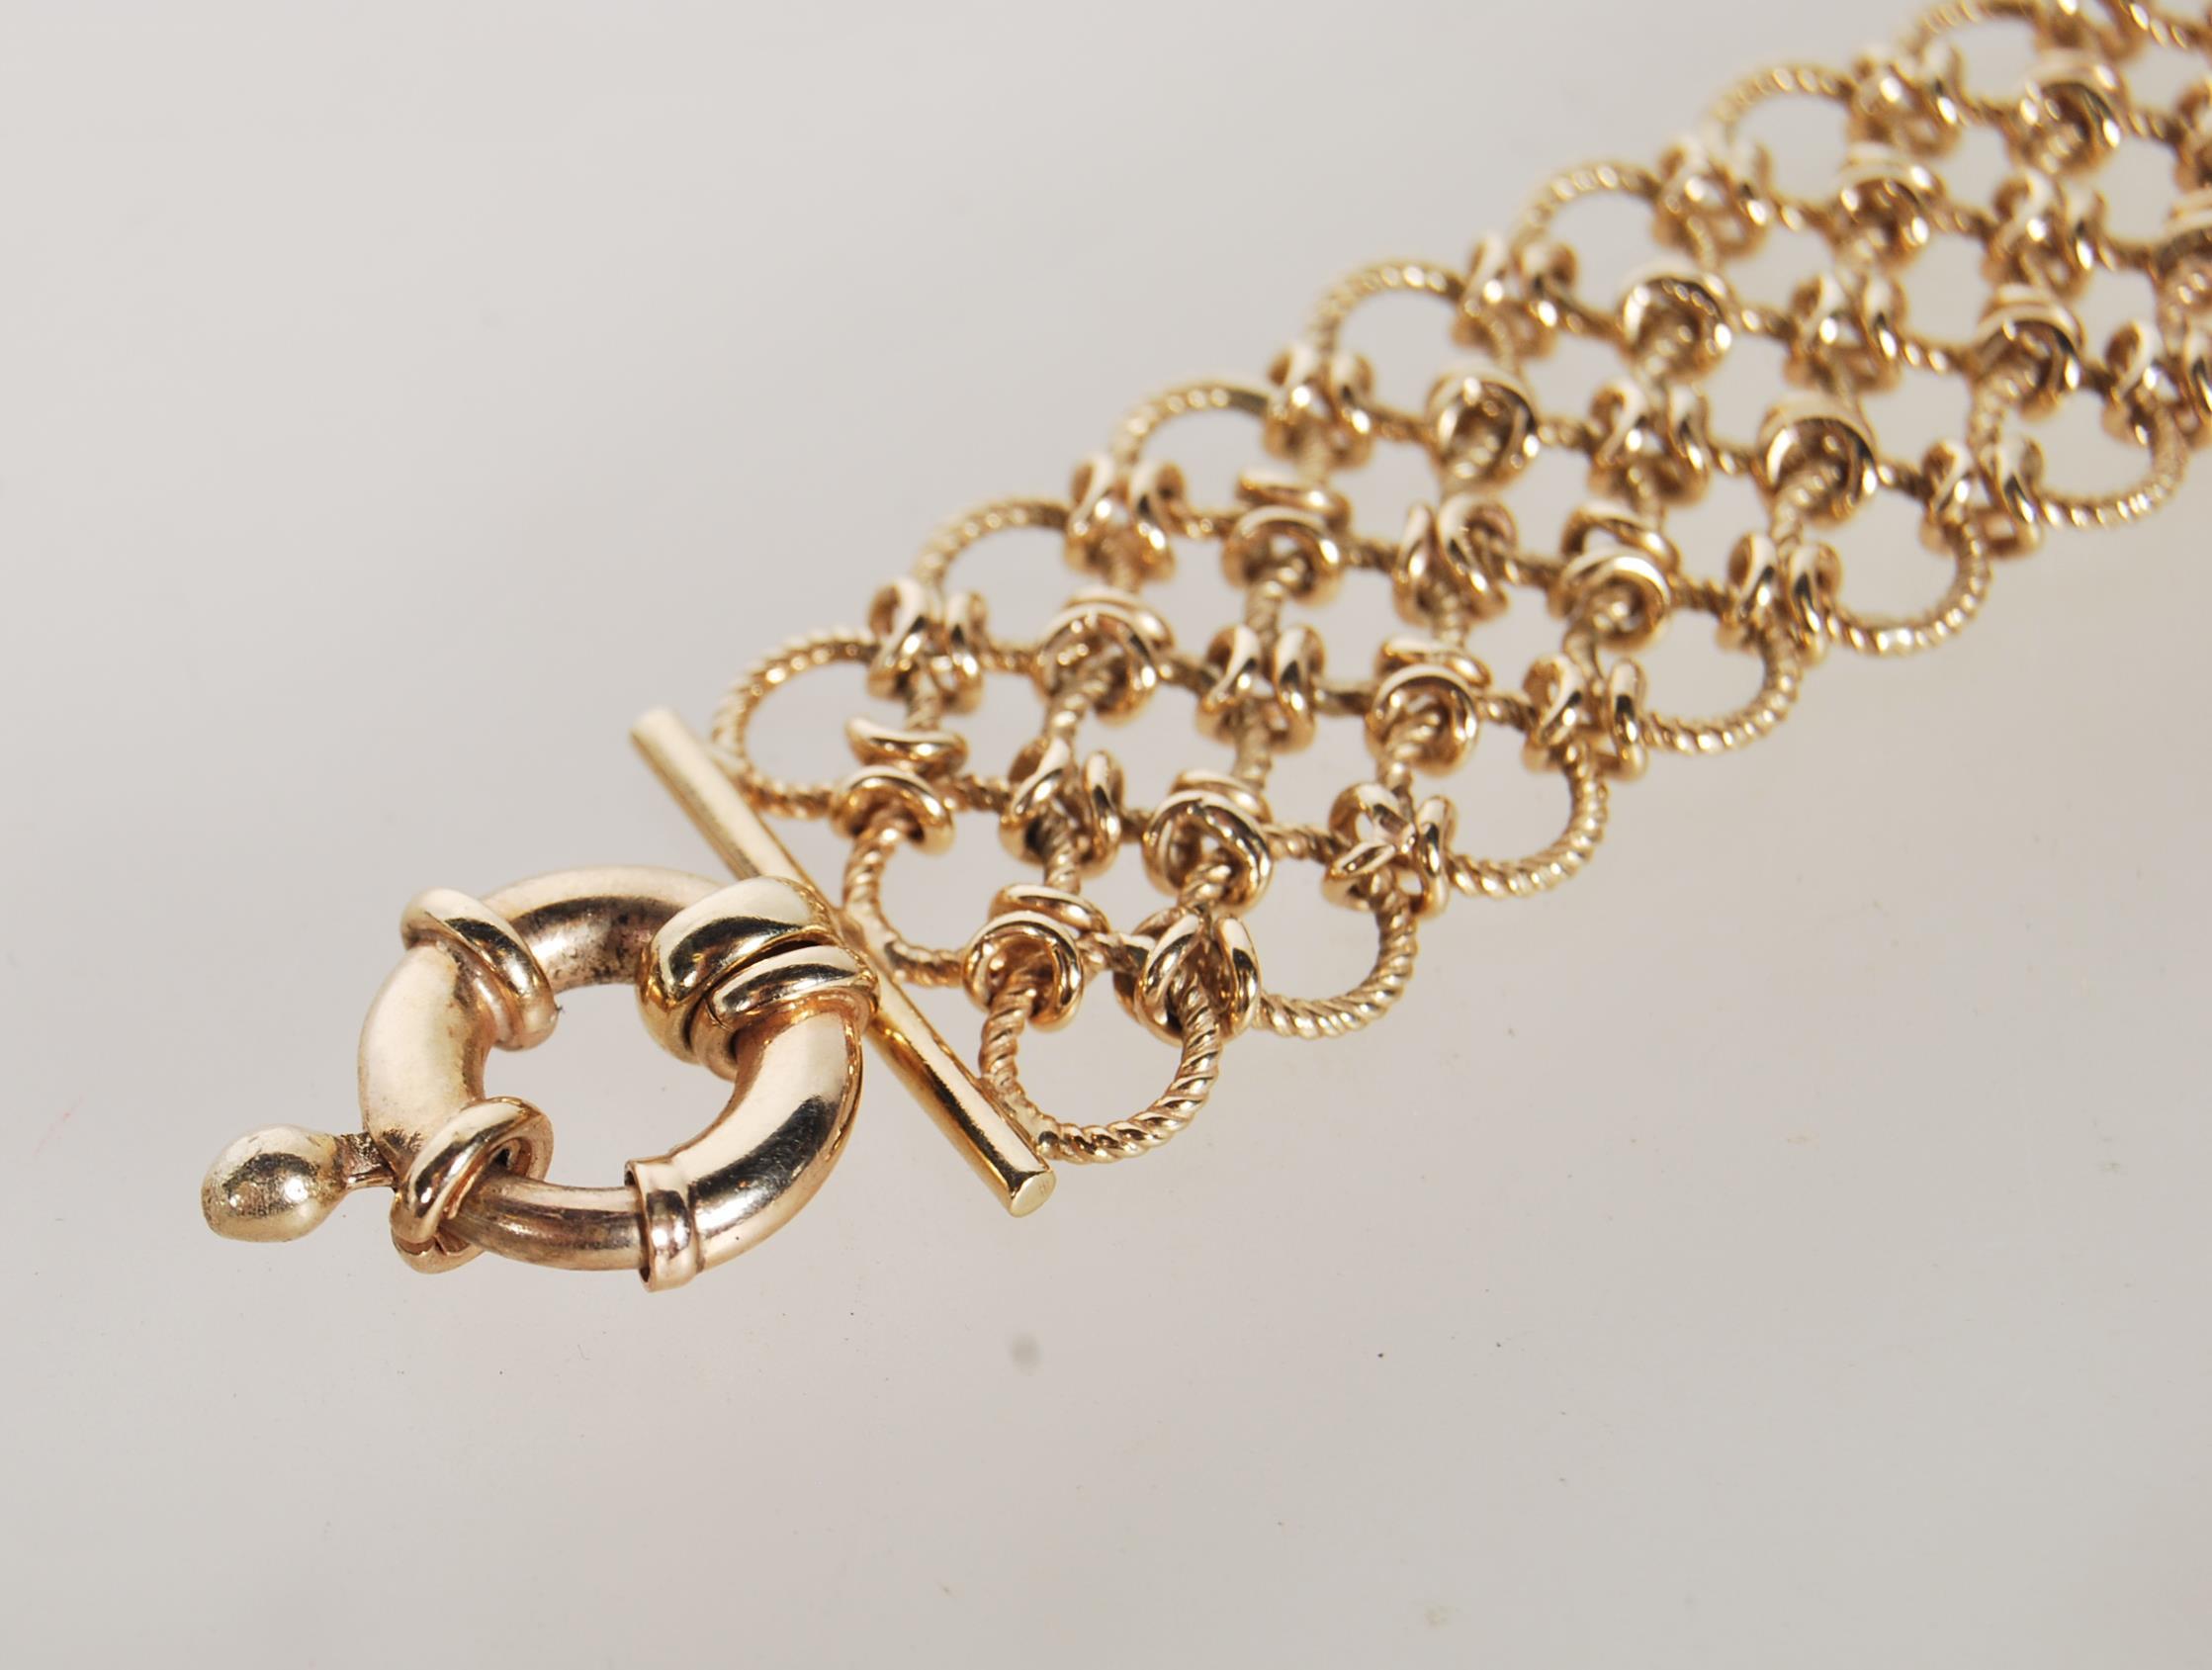 A hallmarked 9ct gold ladies three strand bracelet chain having three rows of rope twist hopps - Image 2 of 5